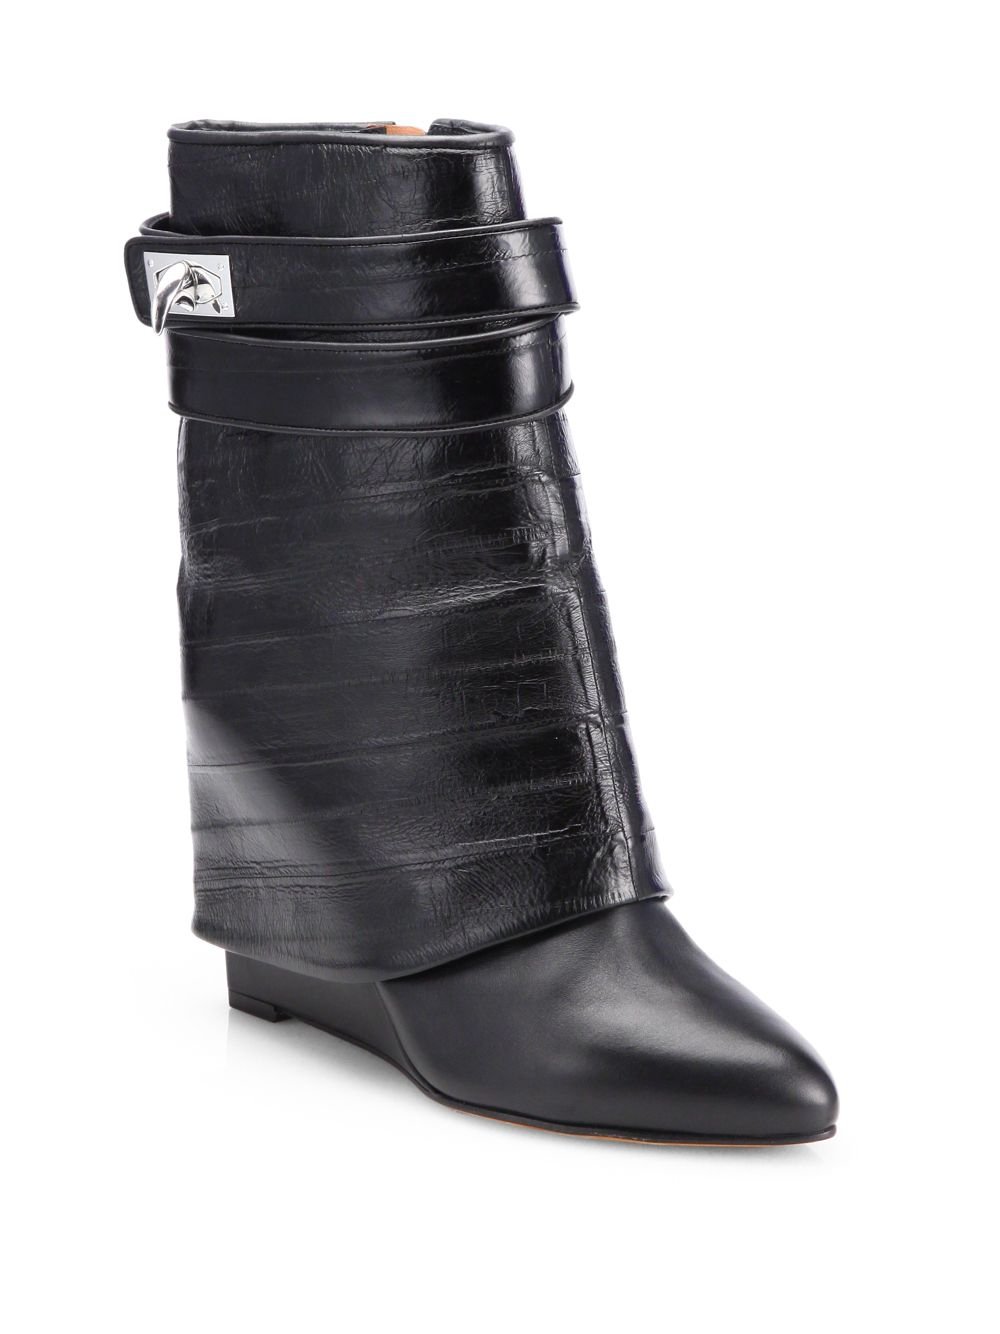 Givenchy Shark-Lock Wedge Boots in Black Eel Skin Leather.jpeg